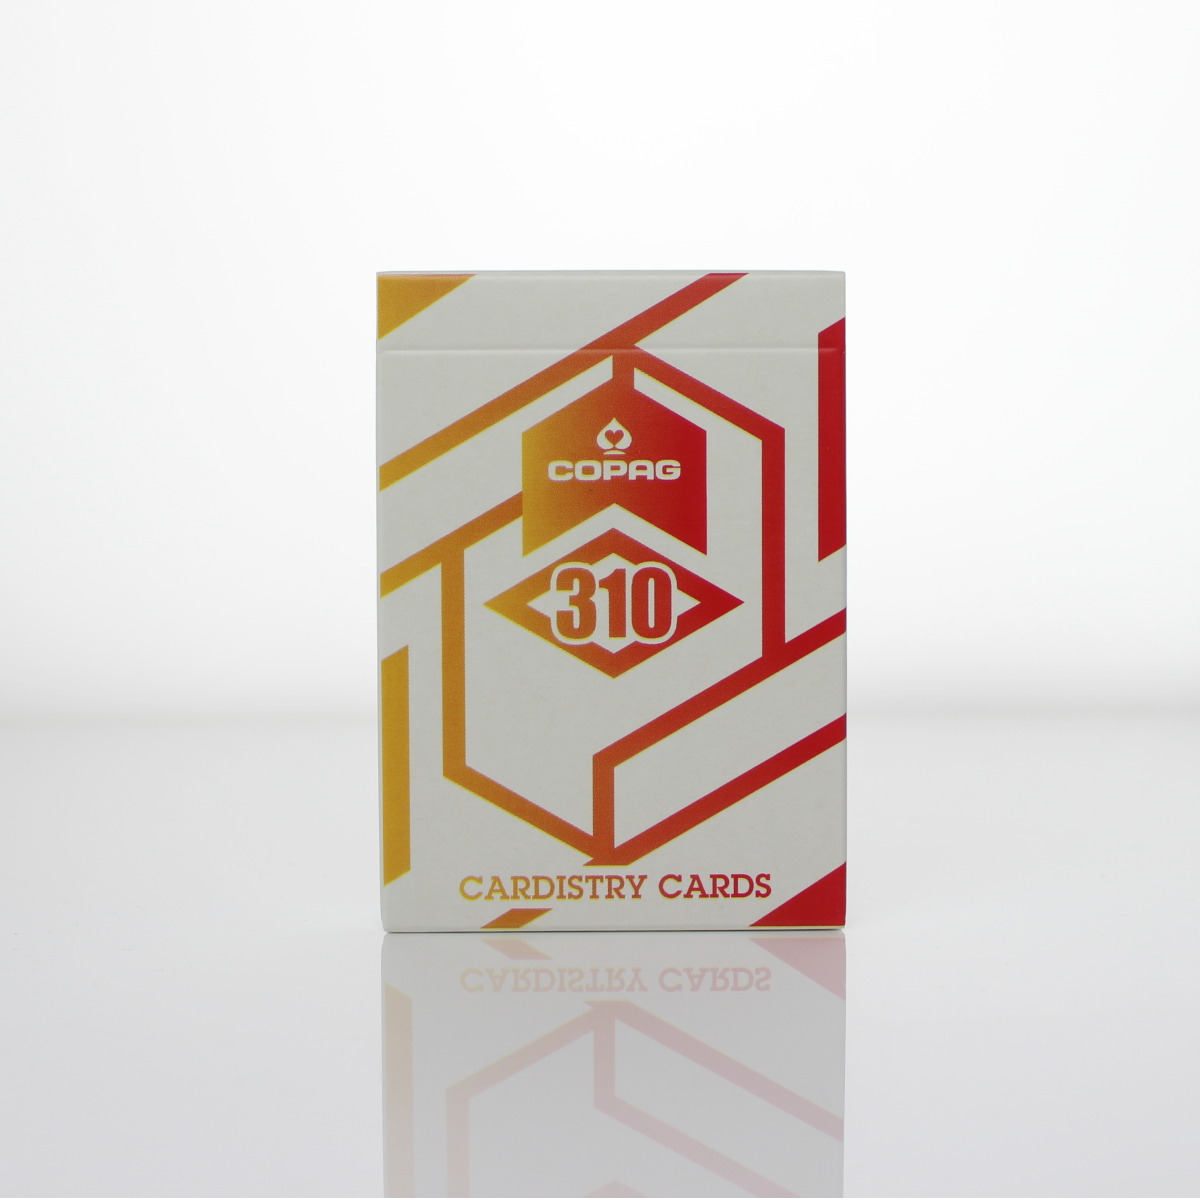 Copag 310 Cardistry Cards - Alpha - Orange Slim Line